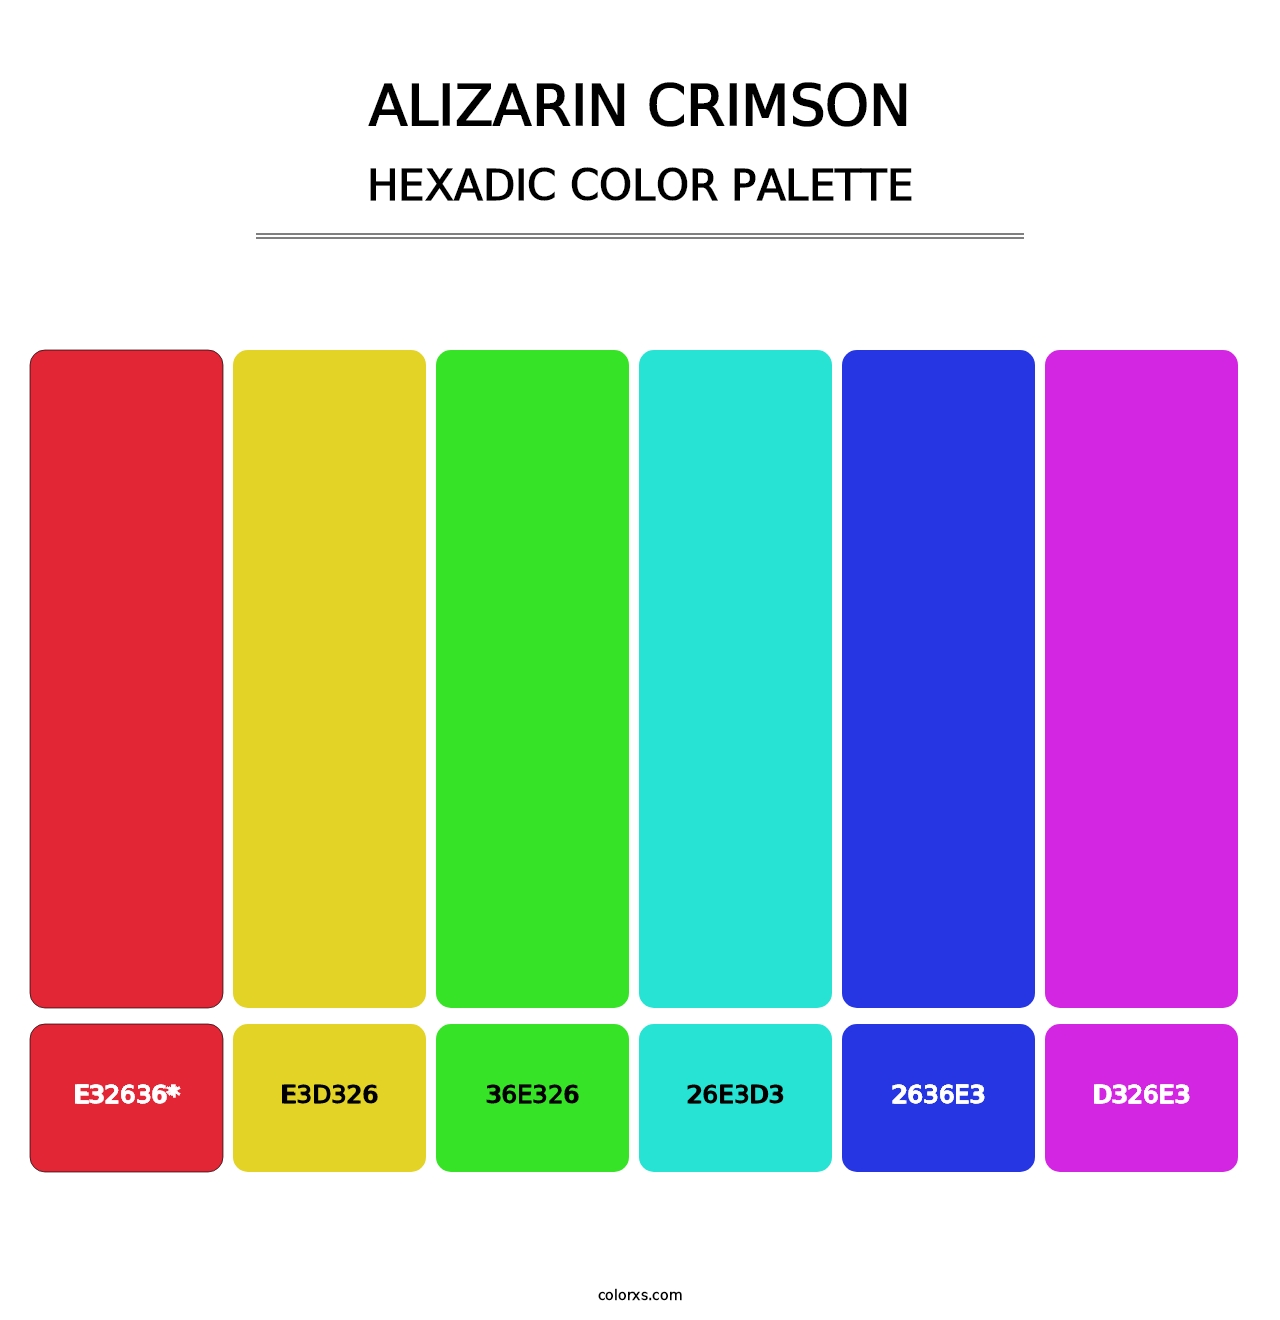 Alizarin Crimson - Hexadic Color Palette